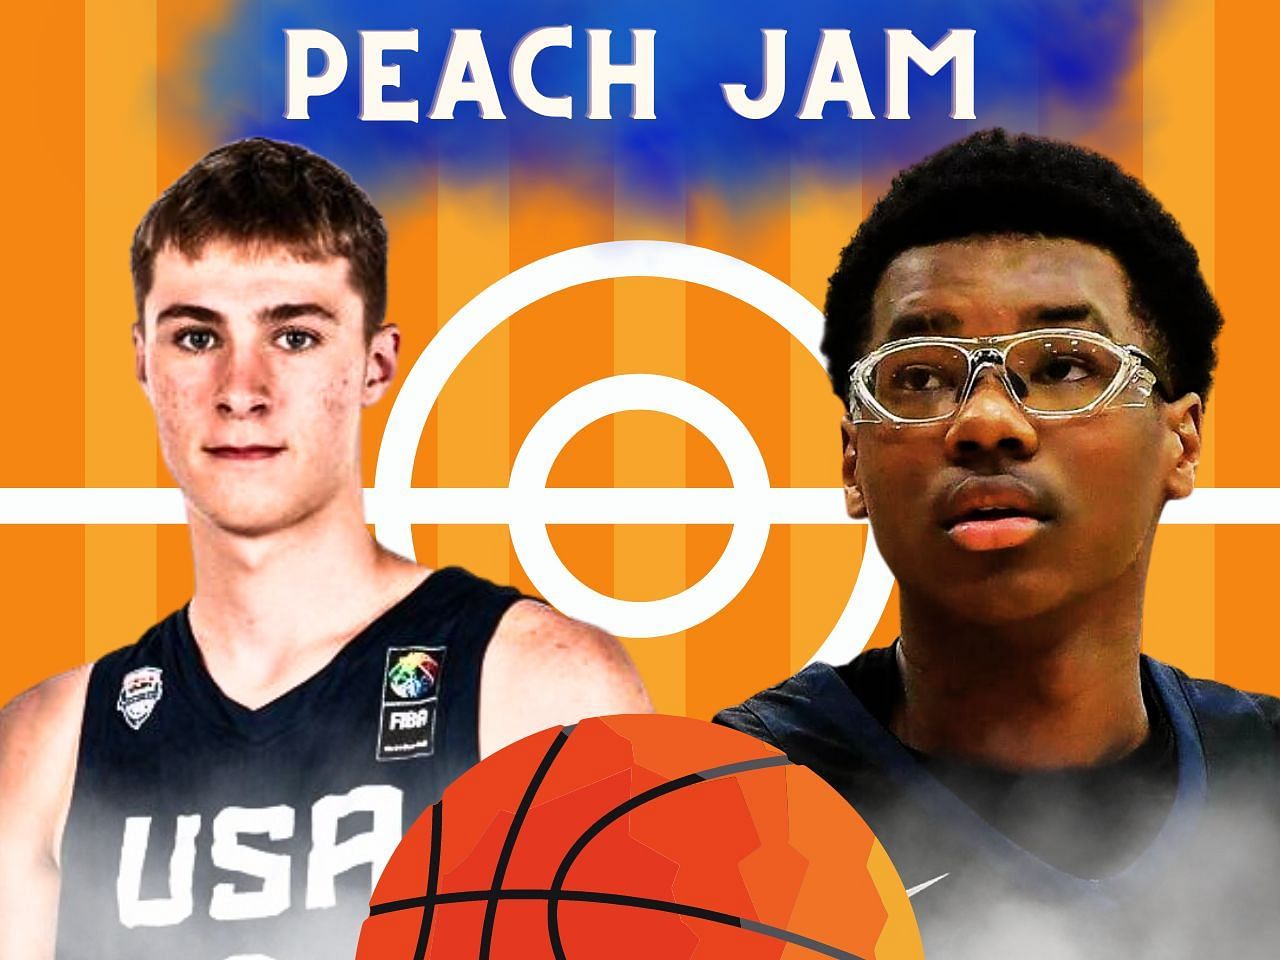 What is Peach Jam basketball tournament